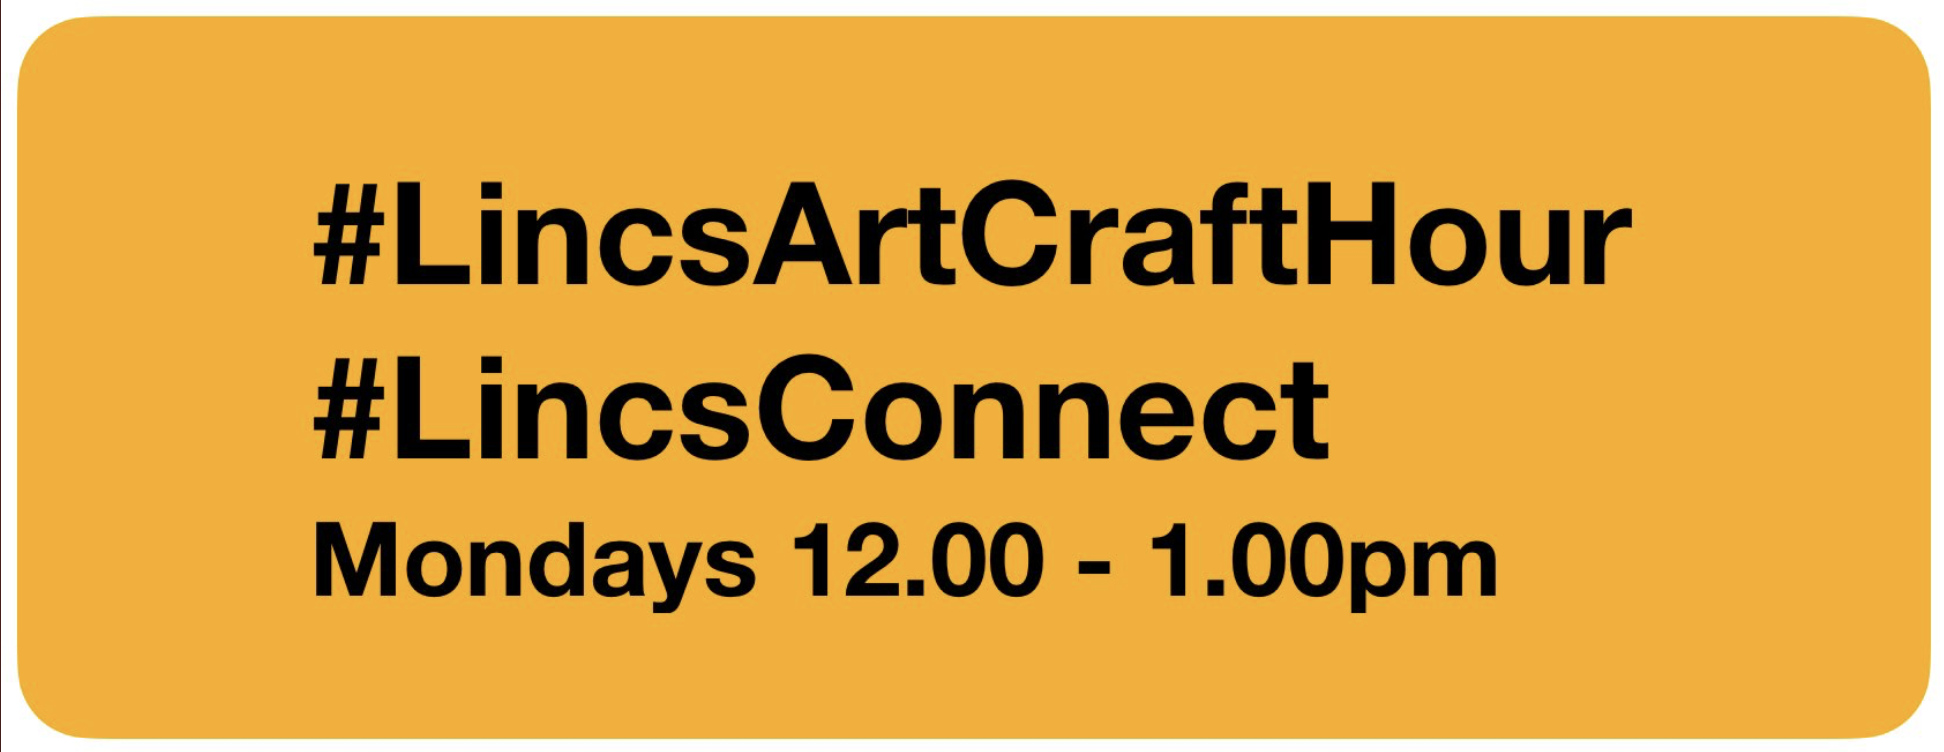 #LincsArtCraftHour every Monday at 12.00pm by LincsConnect the LincsBlogger